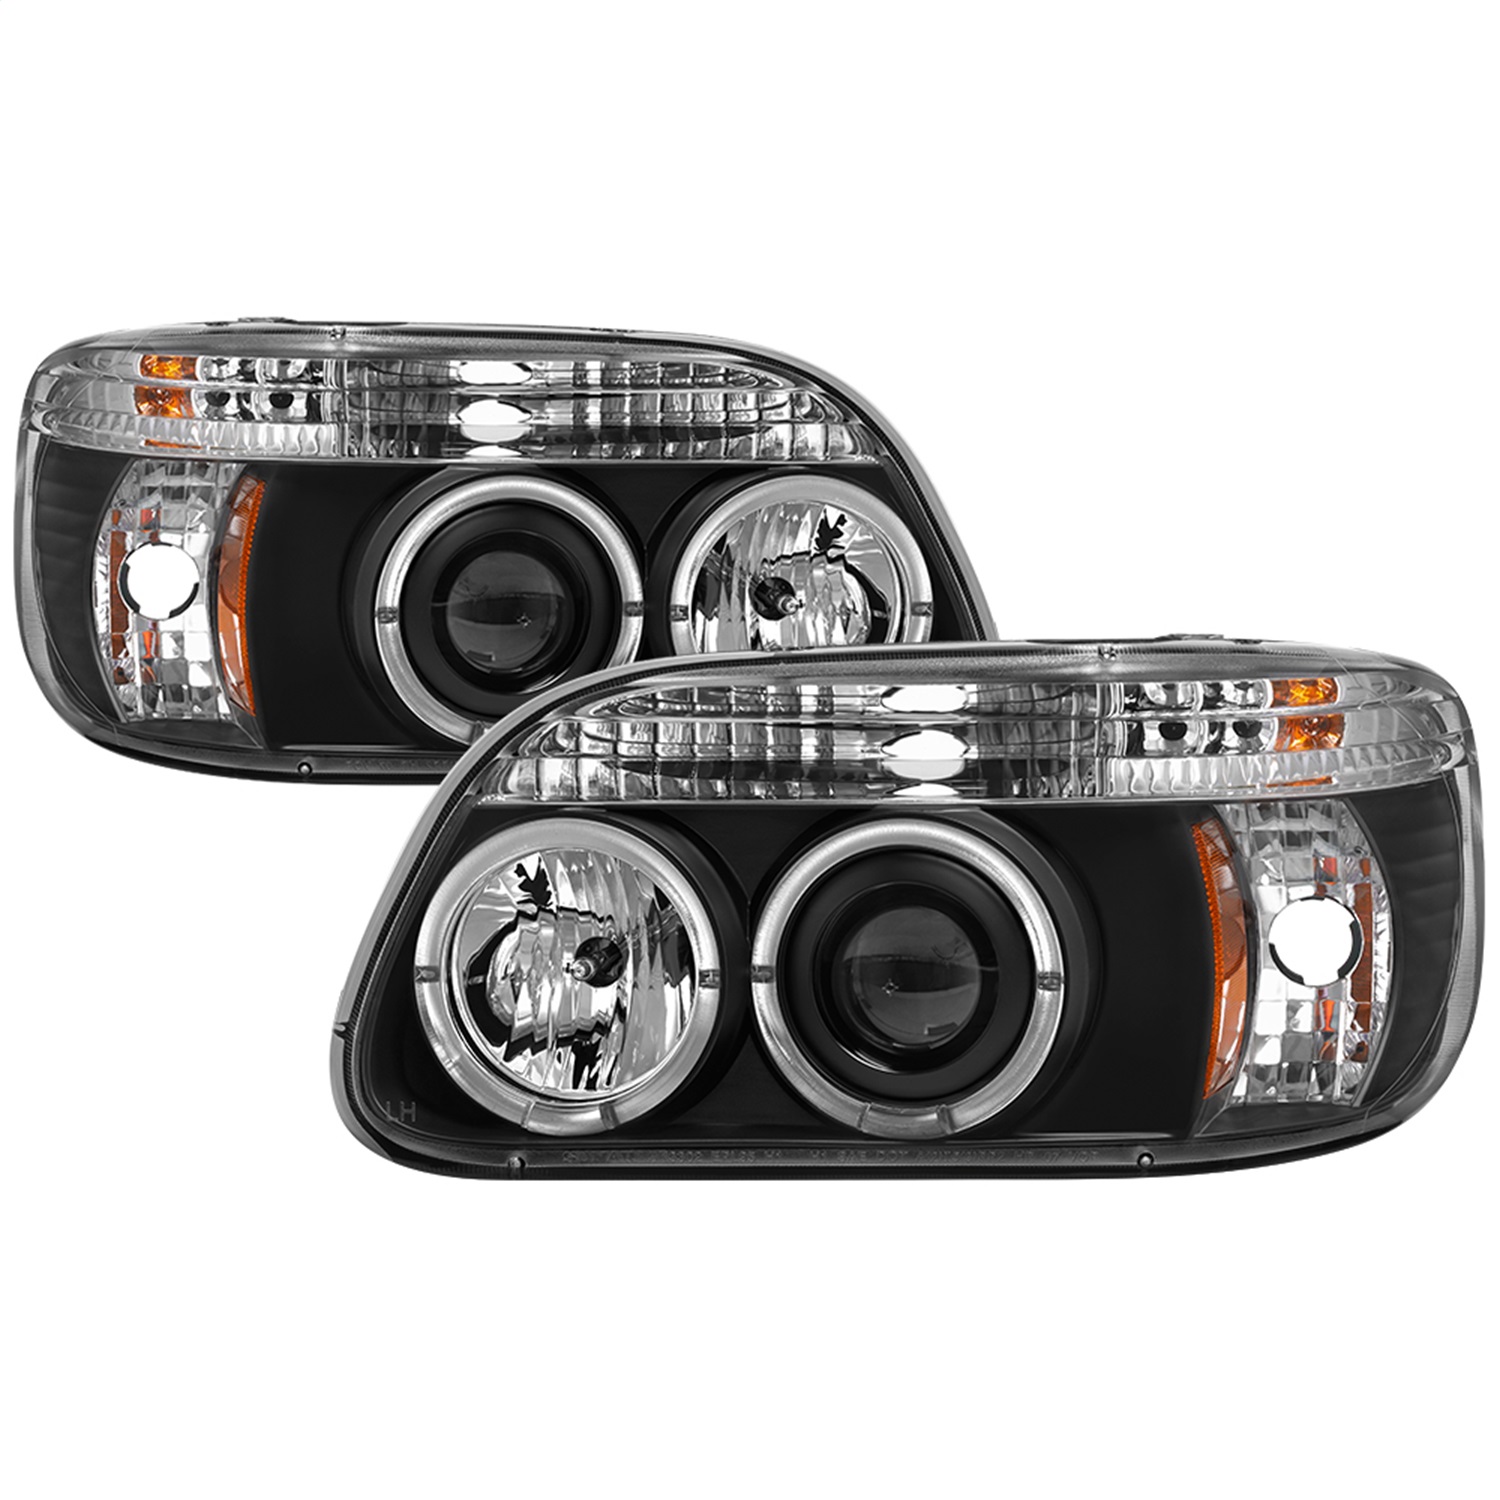 Spyder Auto 5010131 Halo Projector Headlights